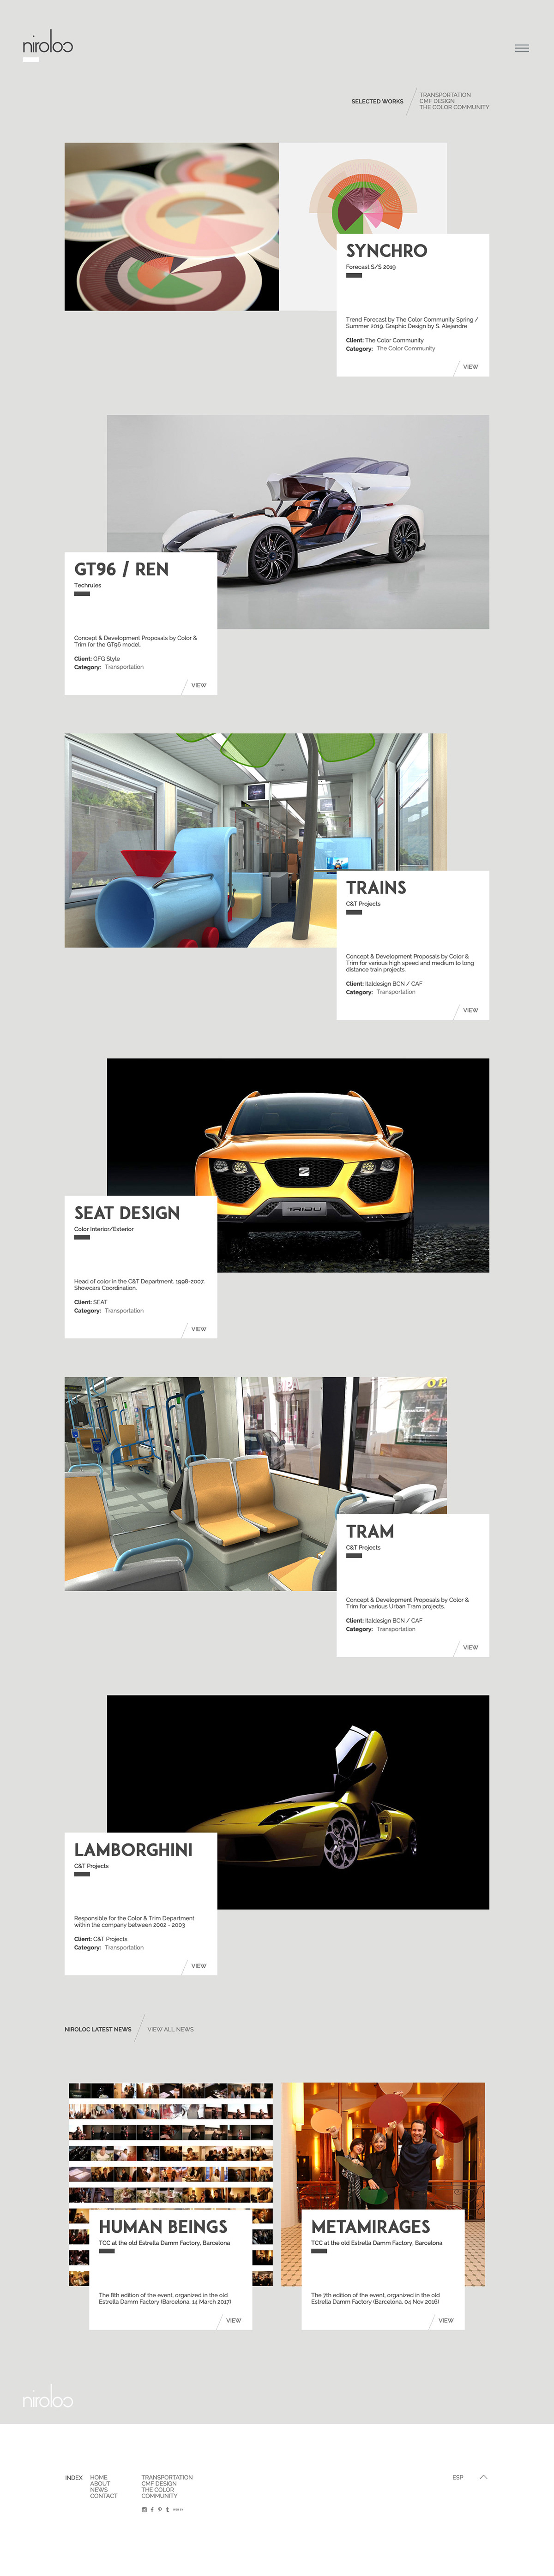 wordpress color portfolio Blog sass custom made theme custom post types Collaboration